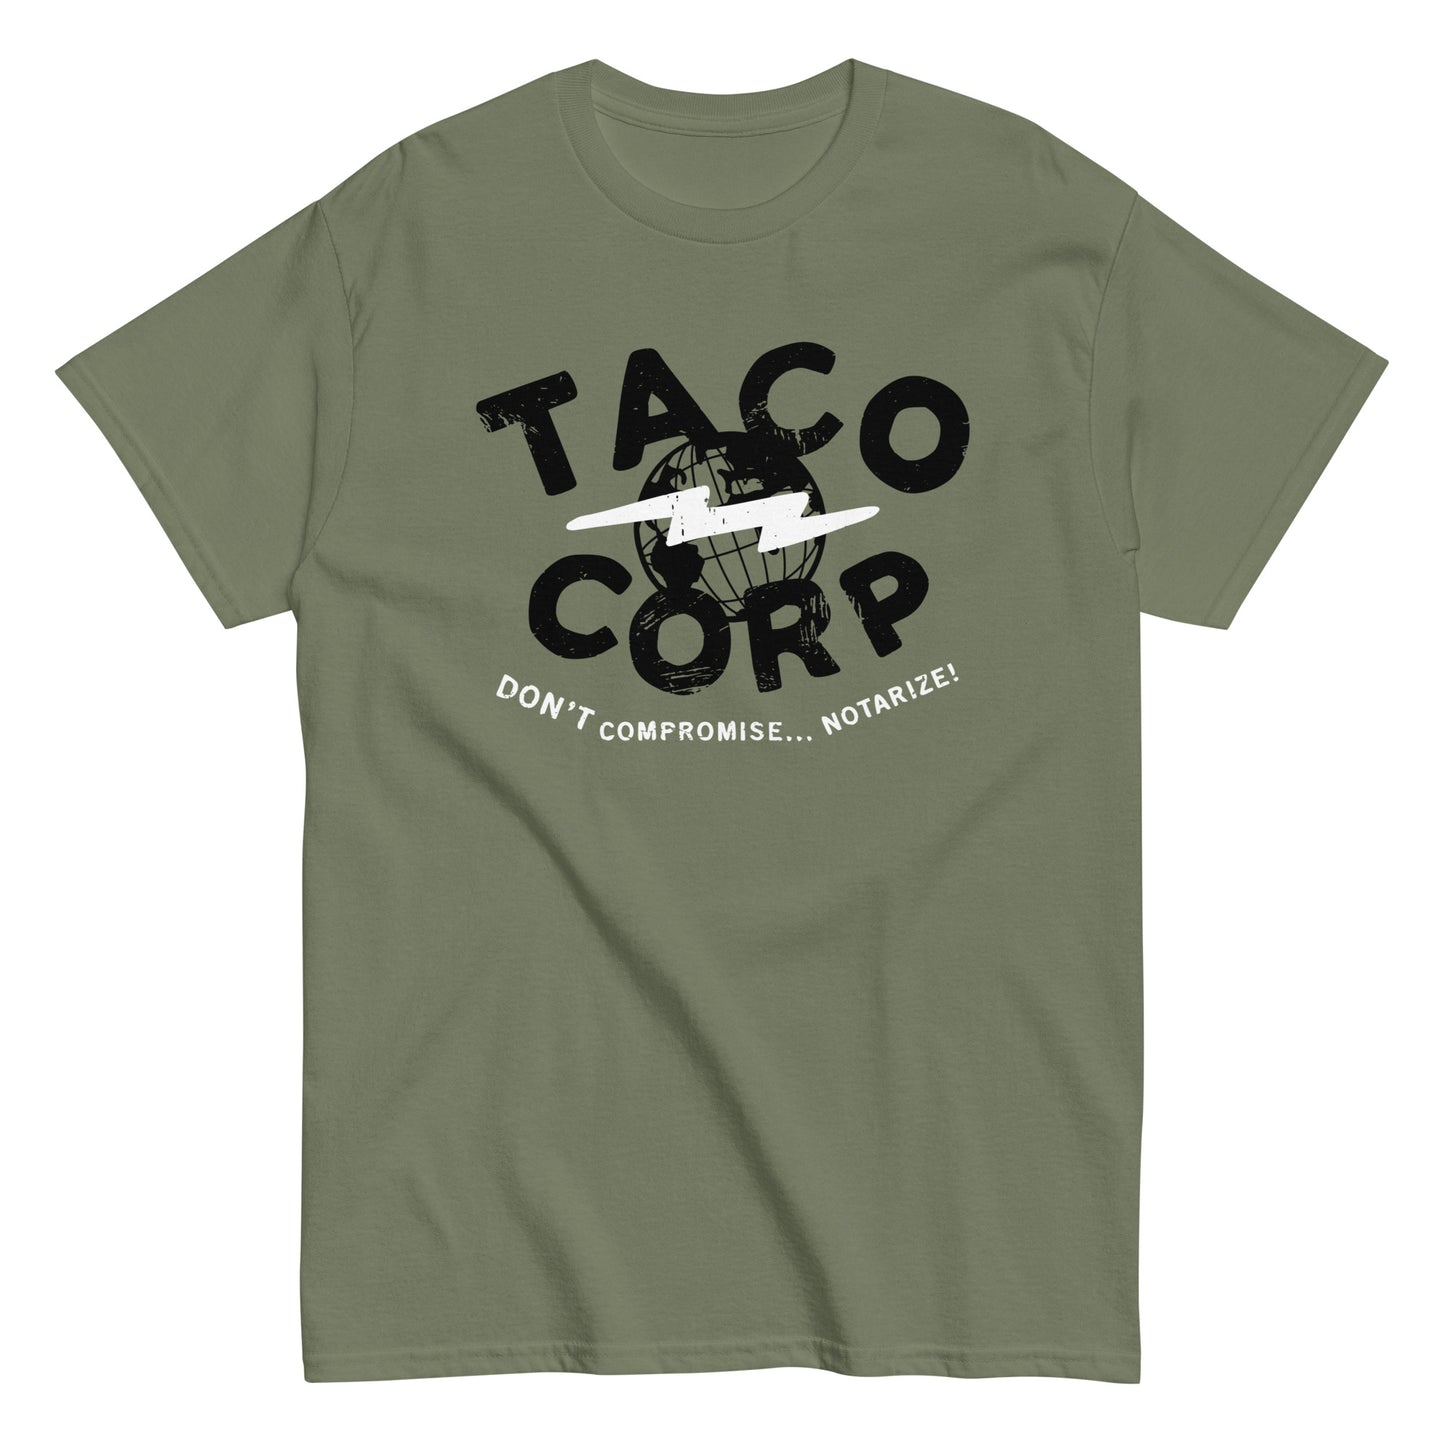 Taco Corp Men's Classic Tee